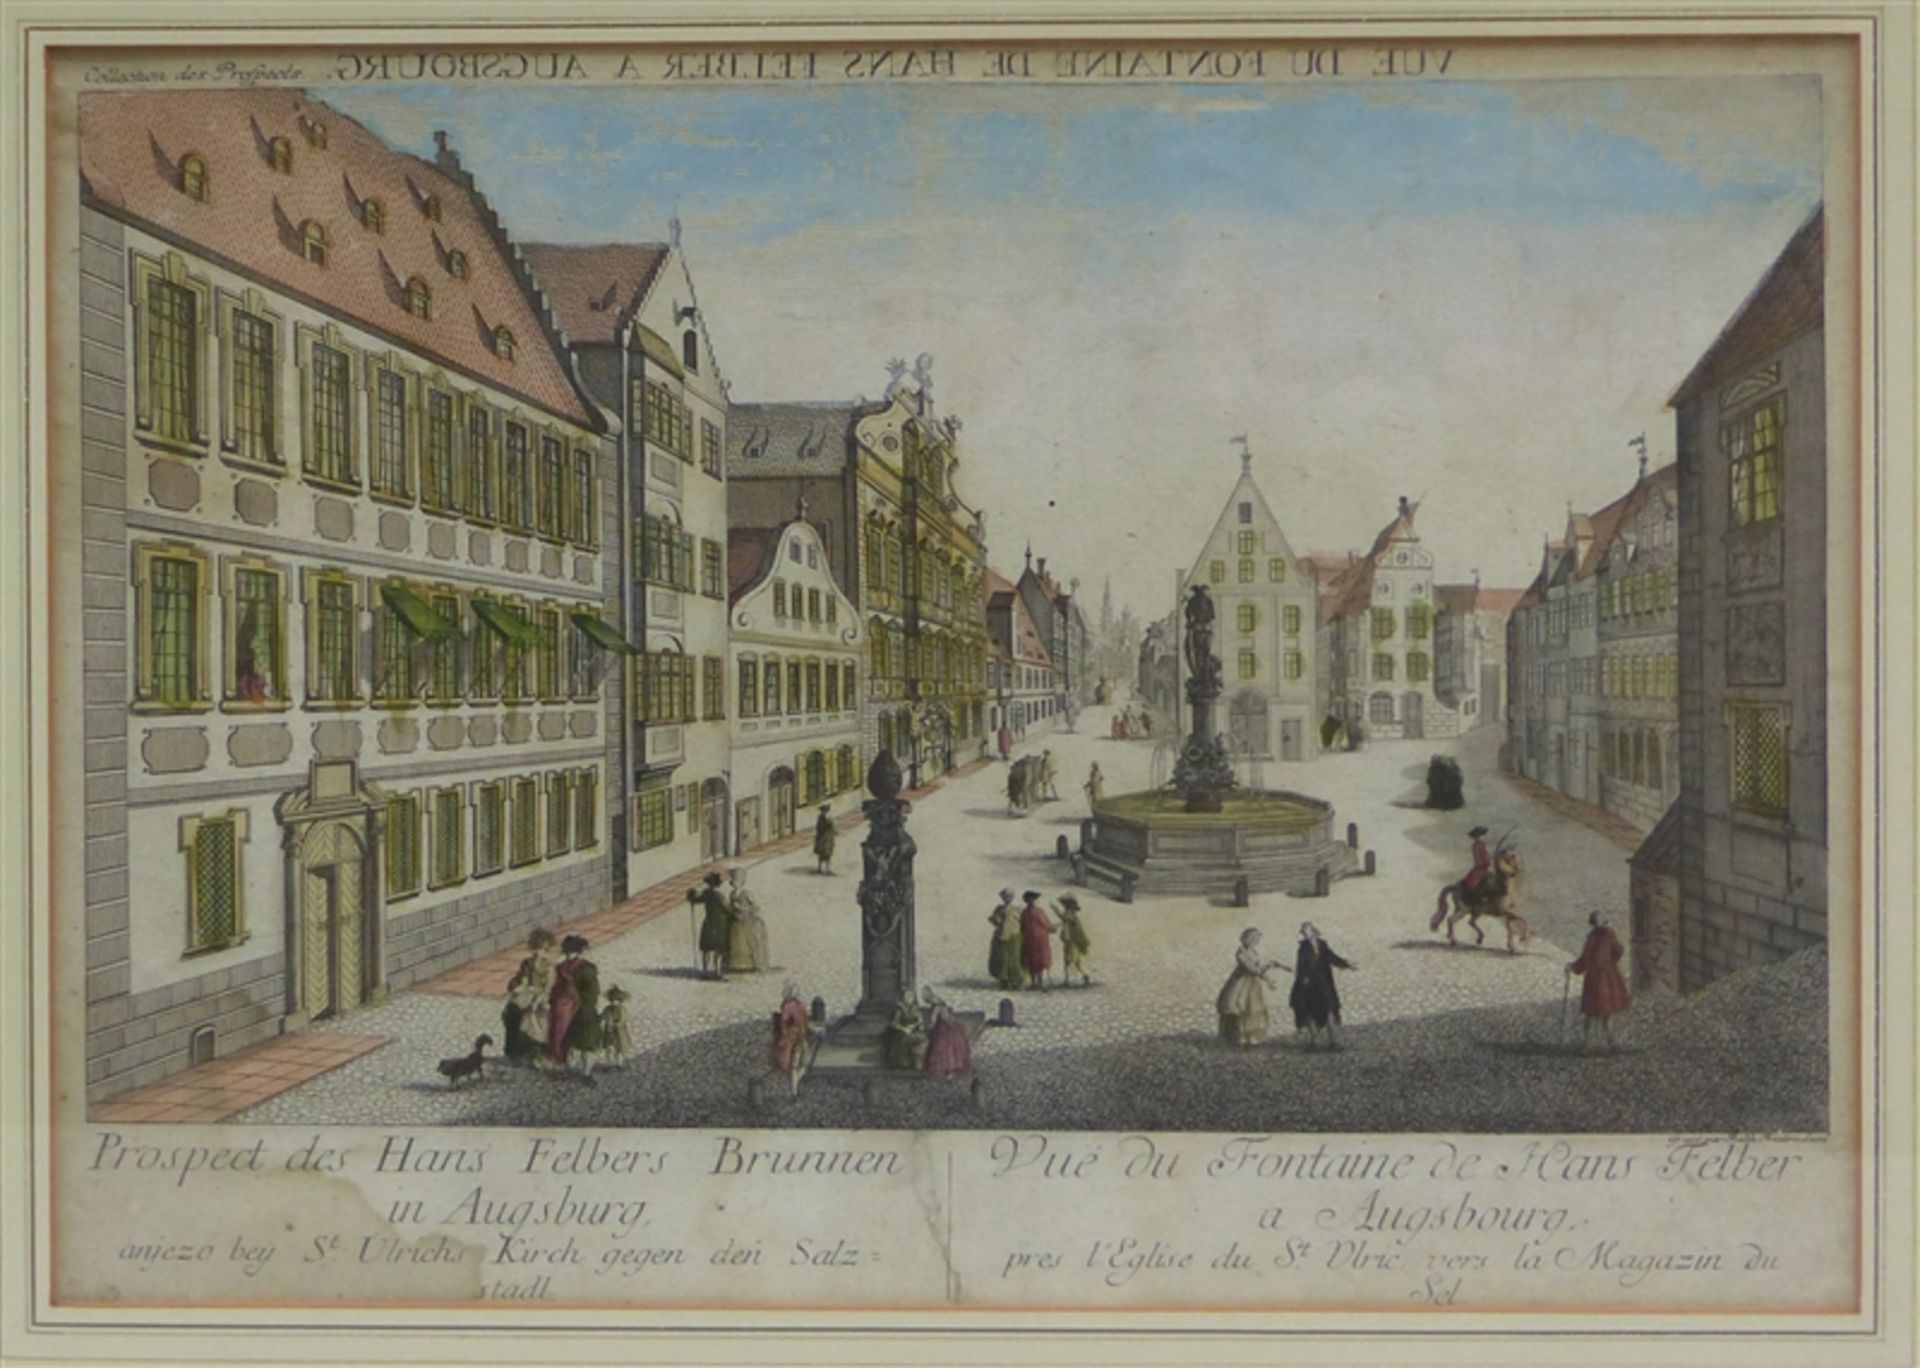 Guckkastenbild Augsburg, "Prospect des Hans Felbers Brunnen in Augsburg anjezo bey St. Ulrichs Kirch